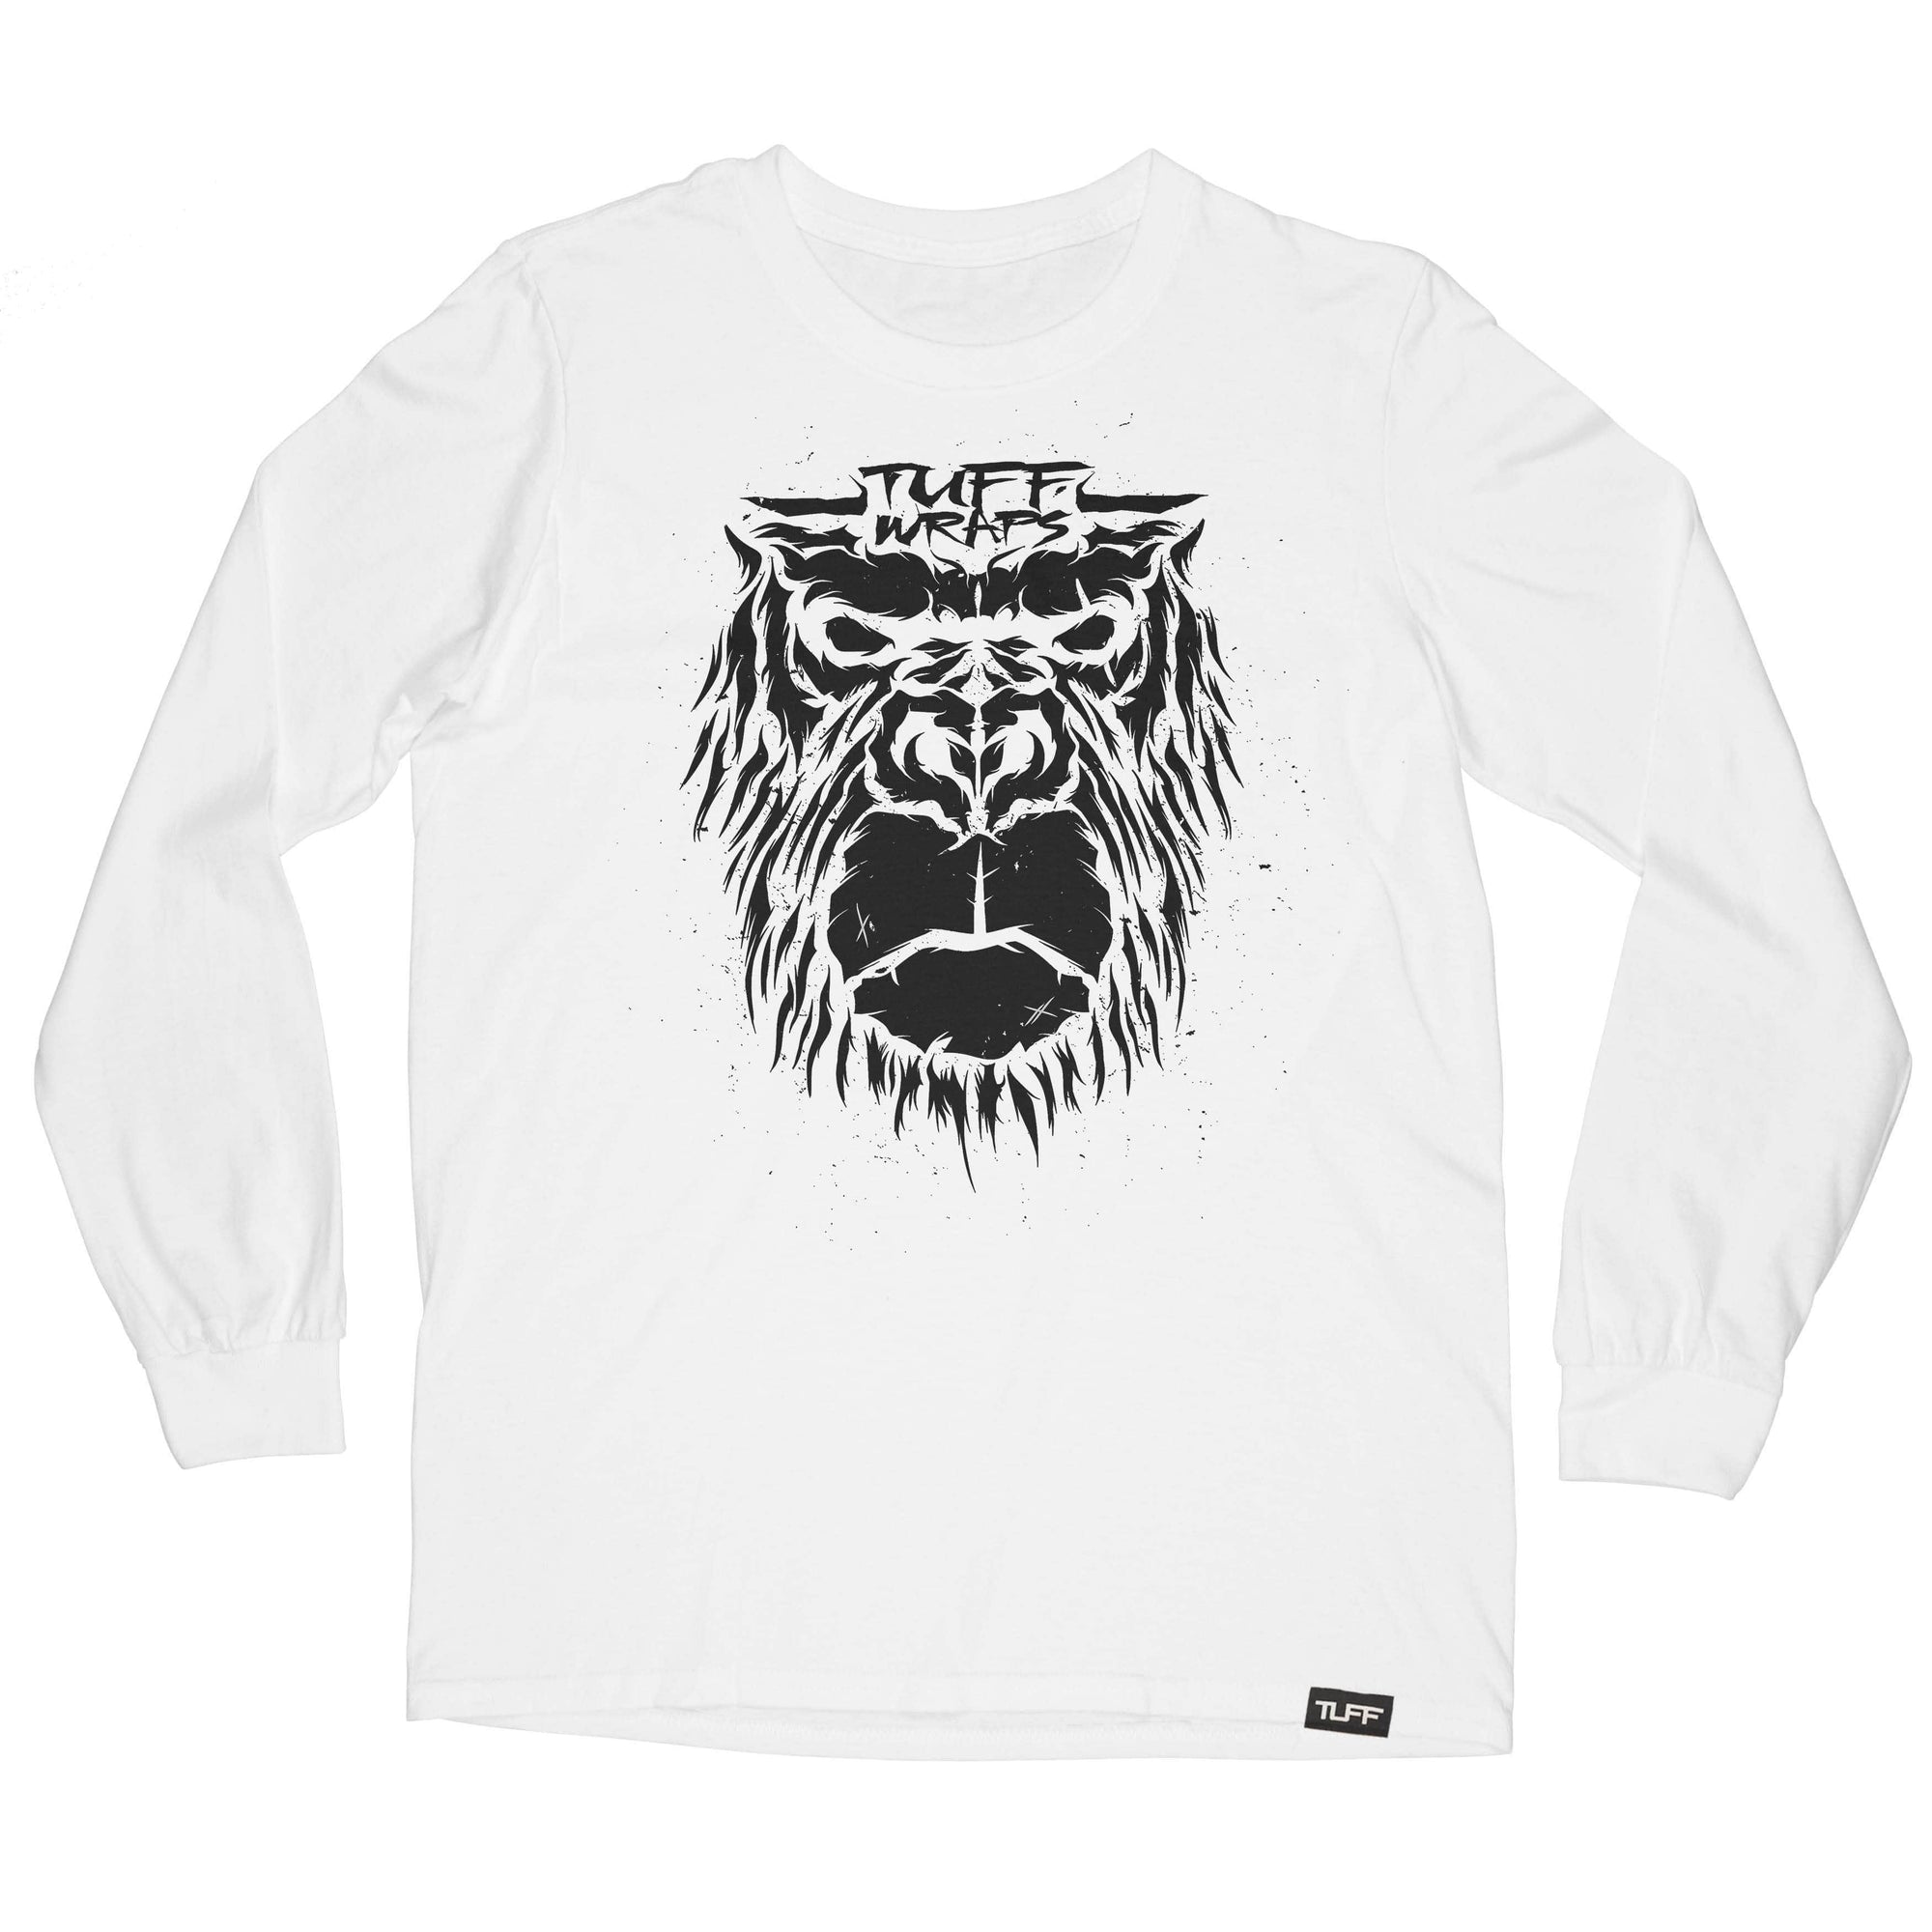 Gorilla TUFF v2 Long Sleeve Tee Men's Long Sleeve T-Shirt